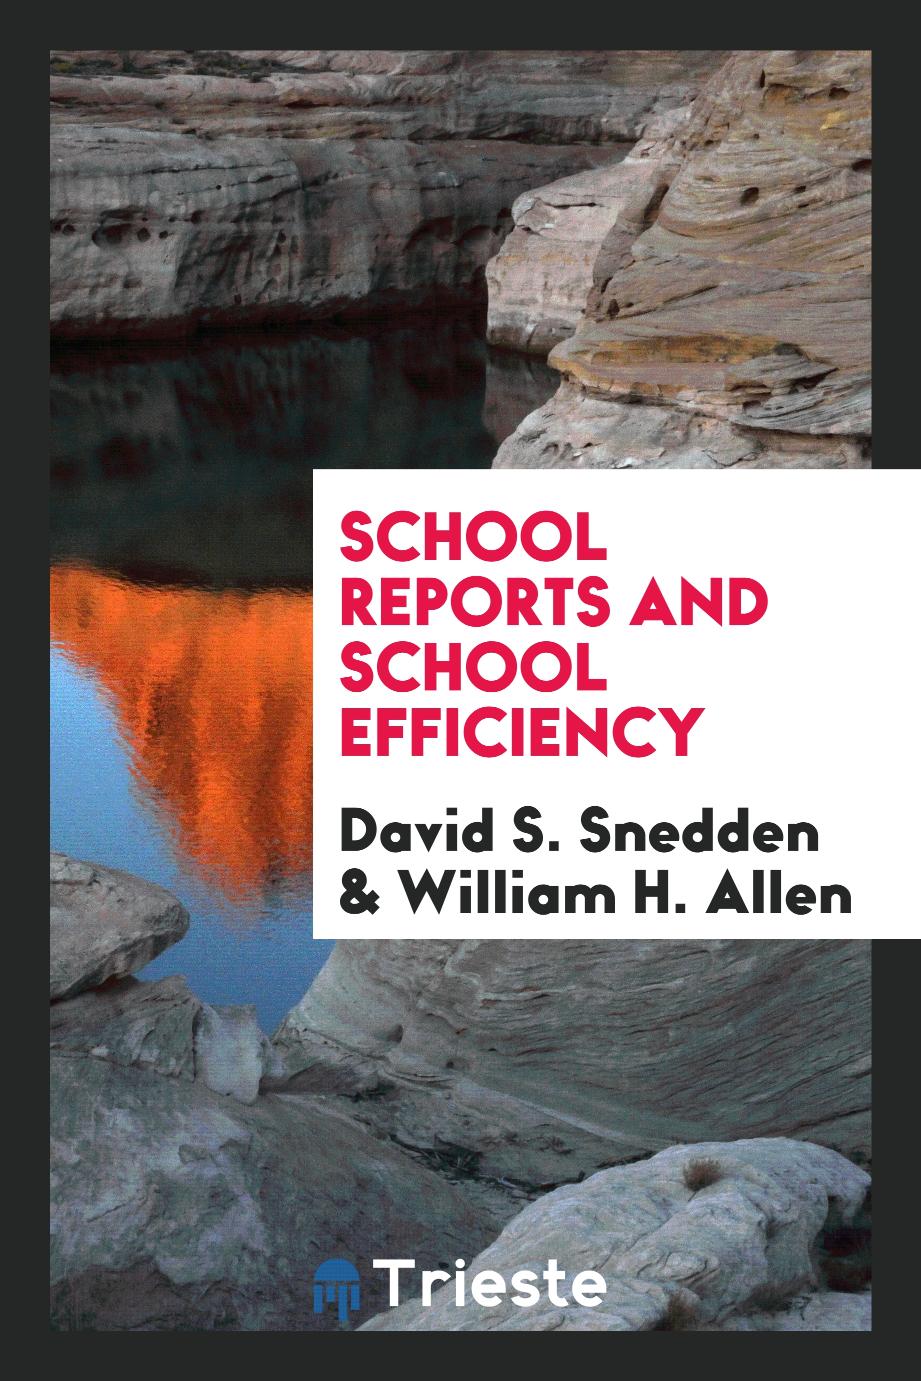 School reports and school efficiency